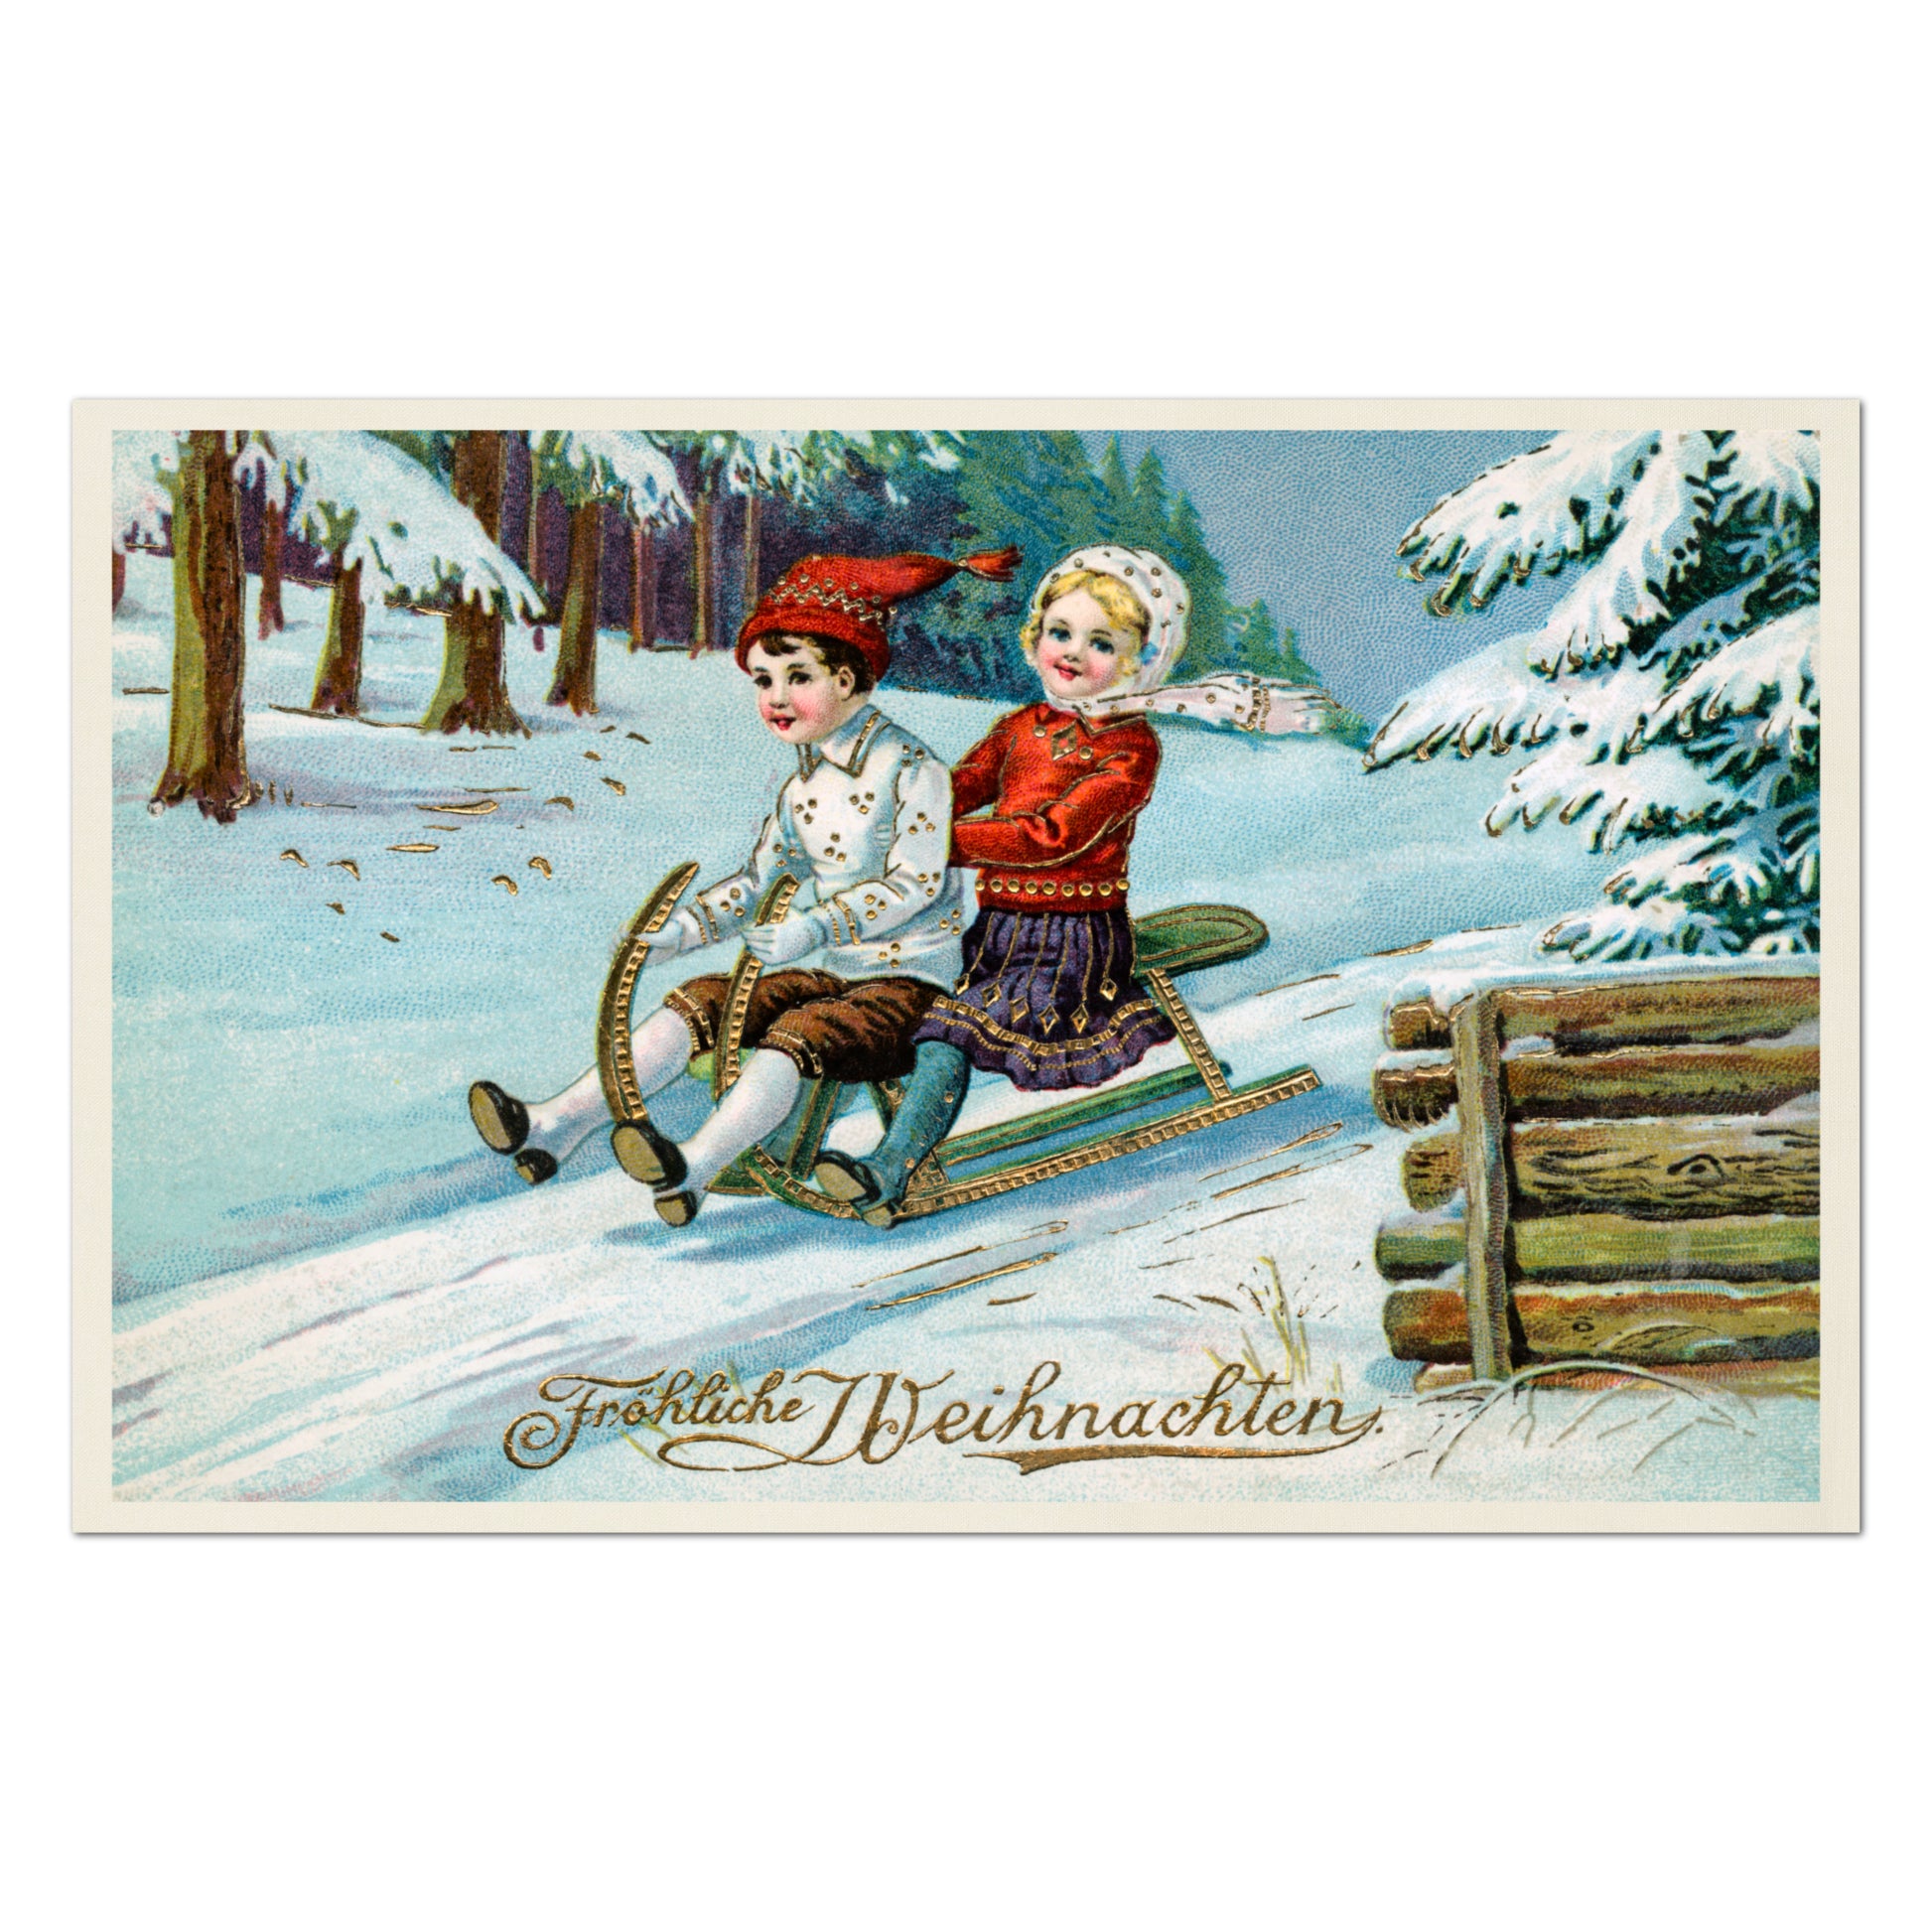 Children Sledding, Christmas Fabric Panel, Victorian Decor, Antique, Vintage, Fabric Panel Print